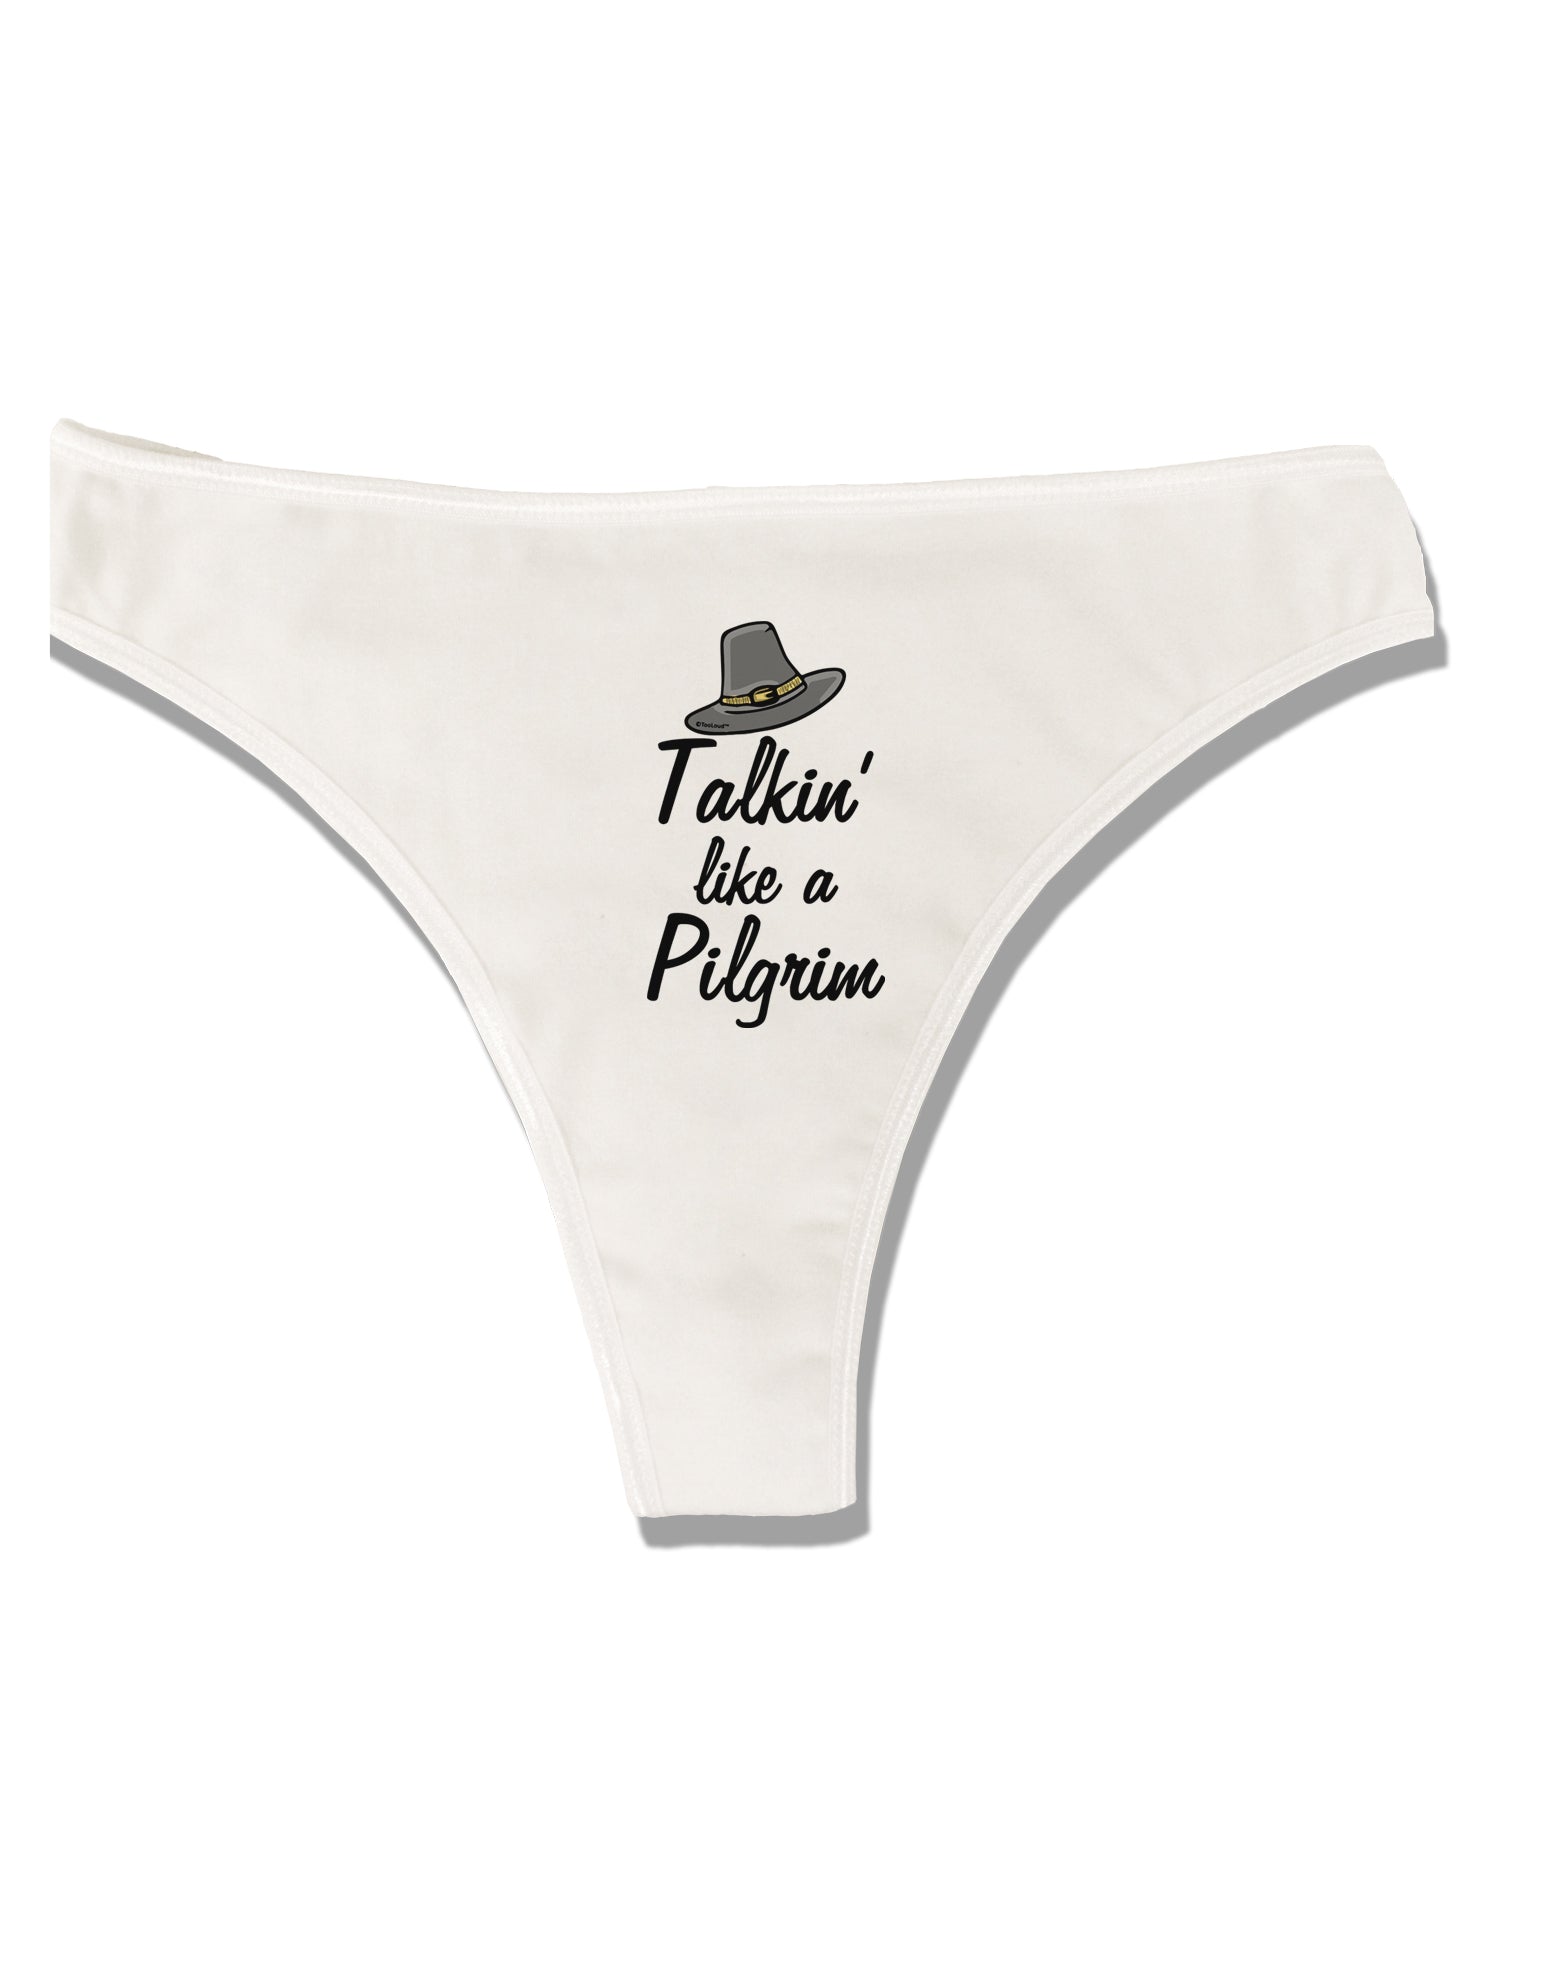 Happy Thanksgiving Womens Thong Underwear White XS Tooloud - Davson Sales